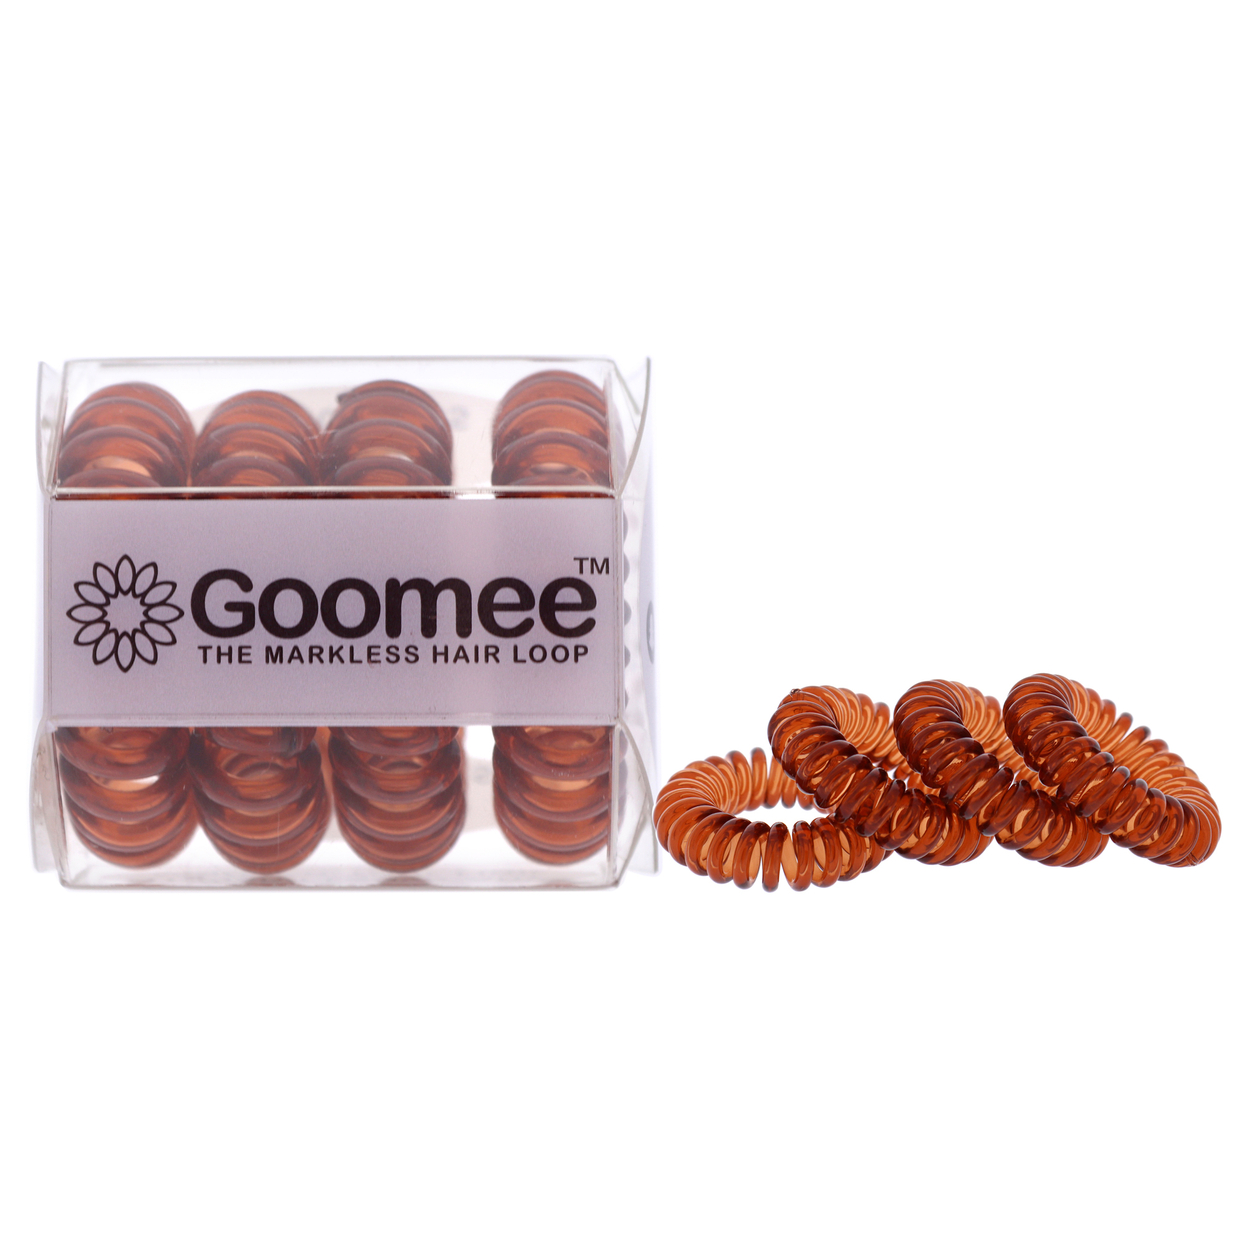 Goomee The Markless Hair Loop Set - Koke Hair Tie 4 Pc